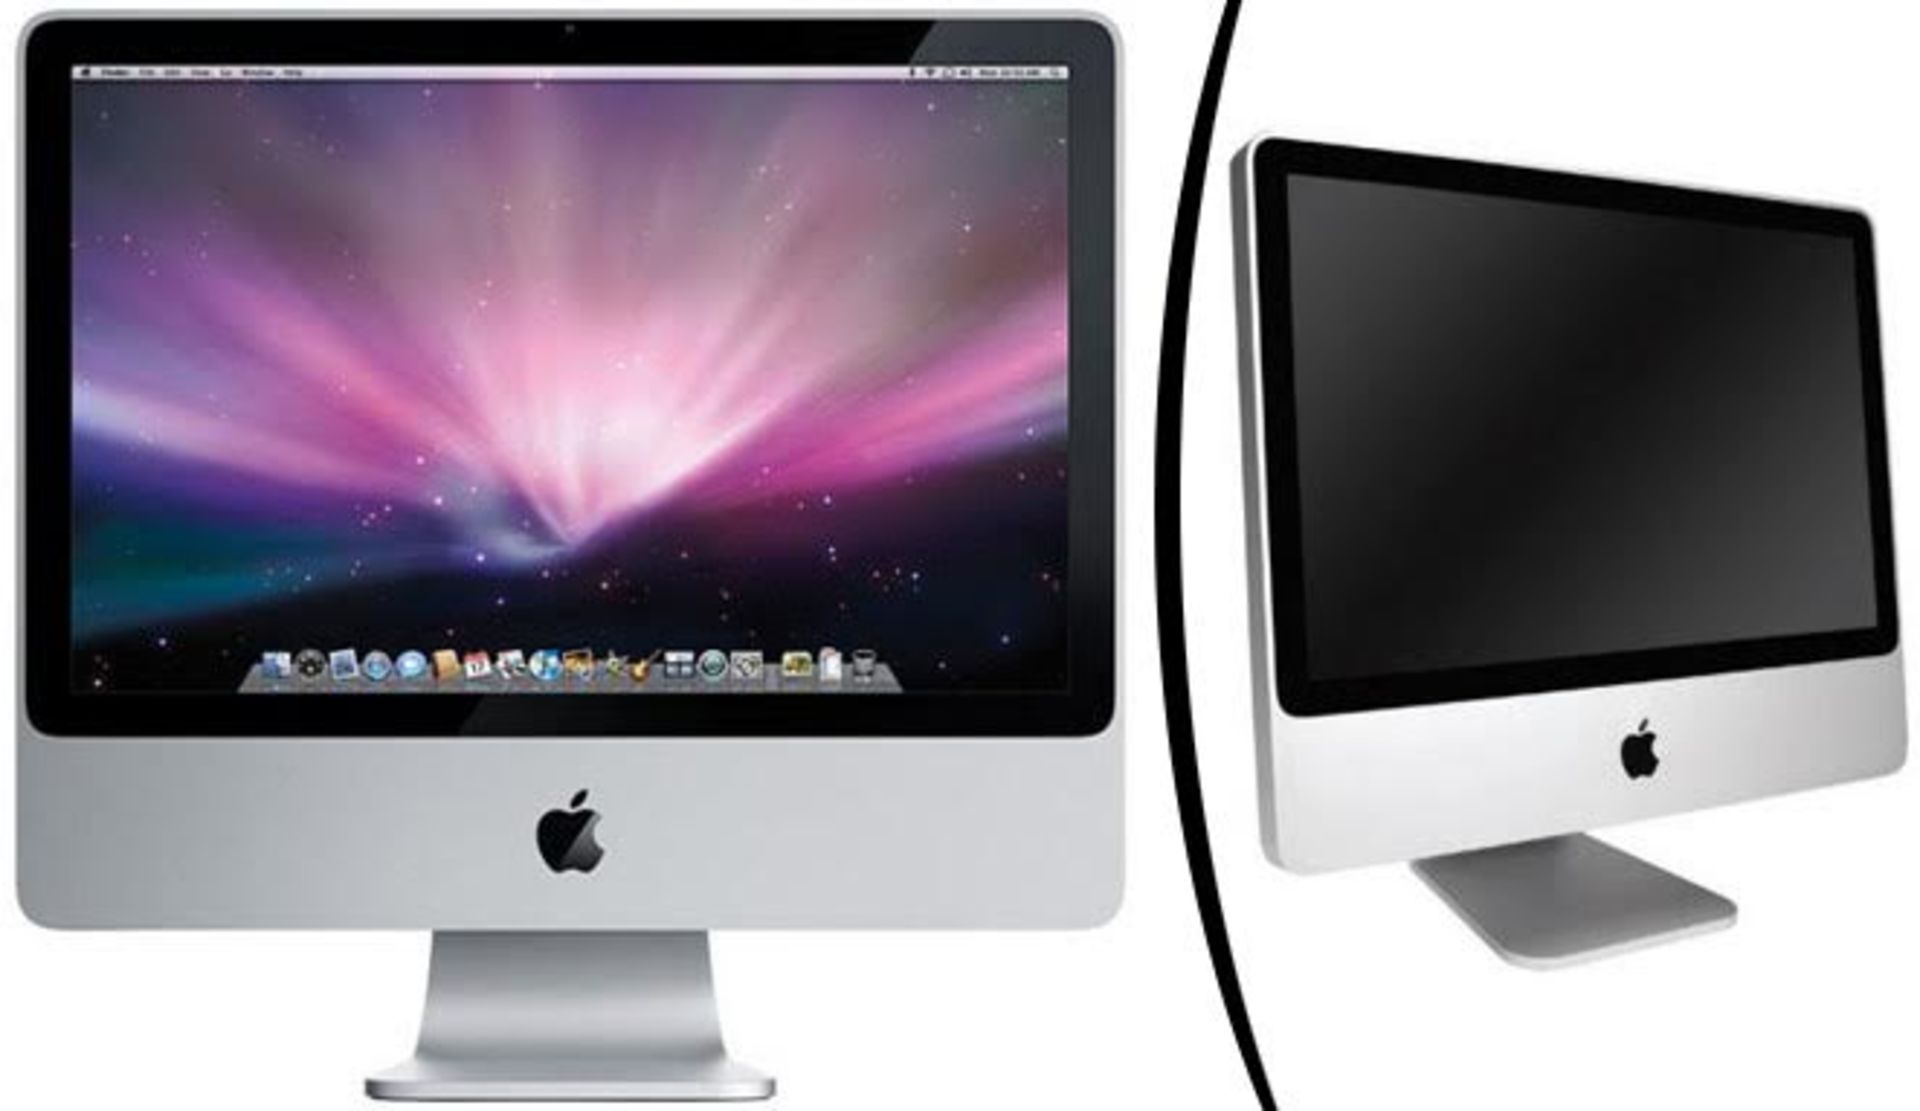 V Grade C Apple iMac A1224 20" Core 2 Duo - 2Ghz - 4GB RAM - 250GB HD - DVDRW